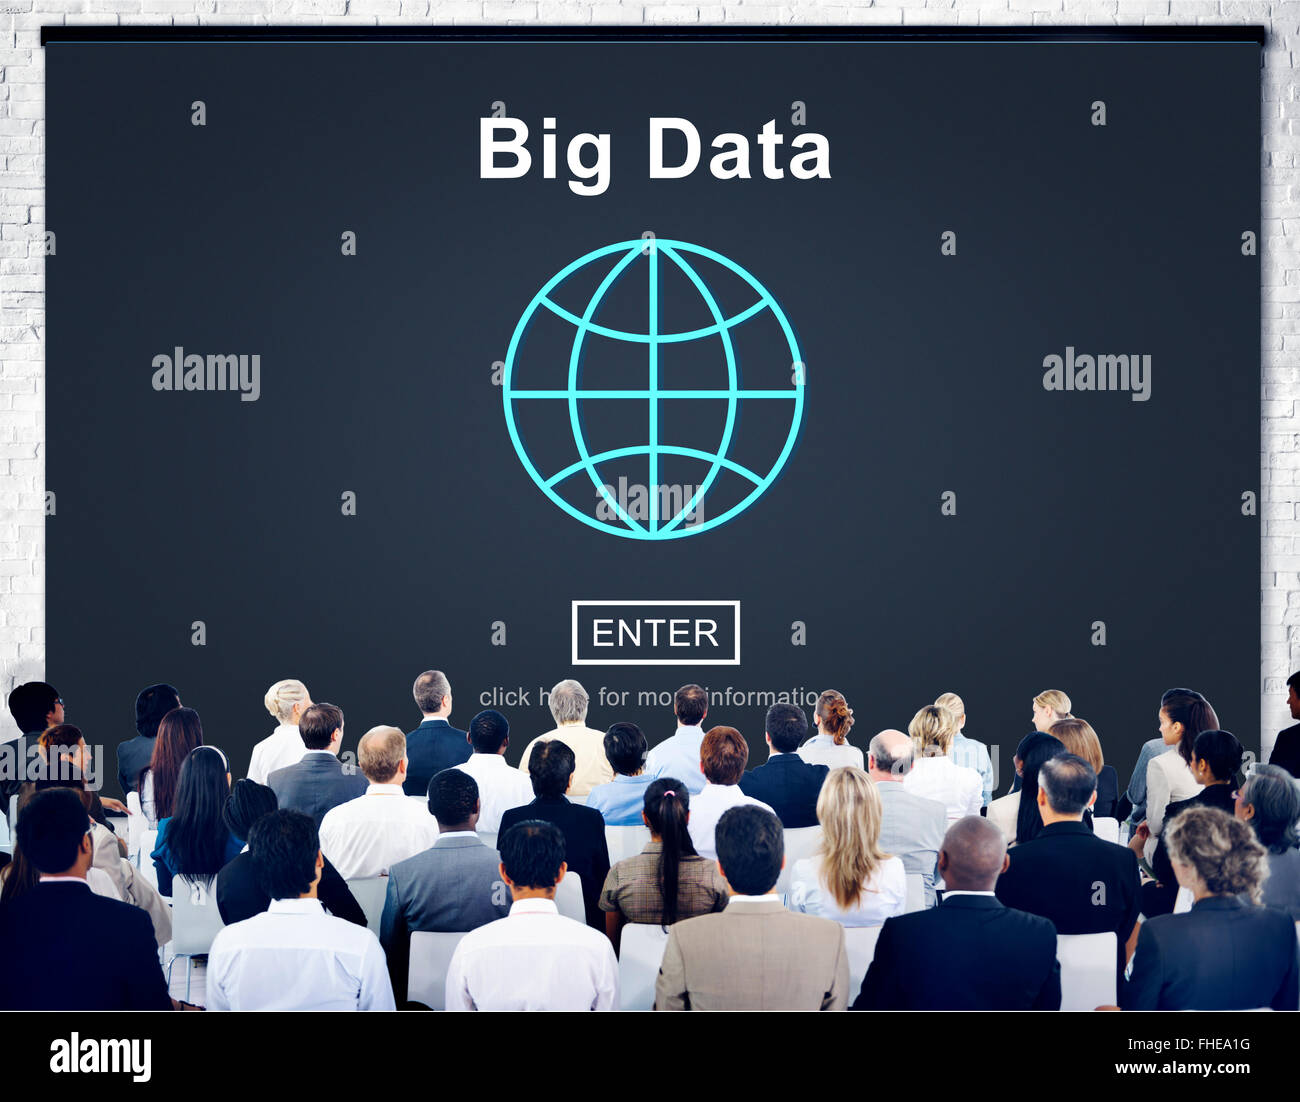 Big Data Information Storage System Network Technology Concept Stock Photo